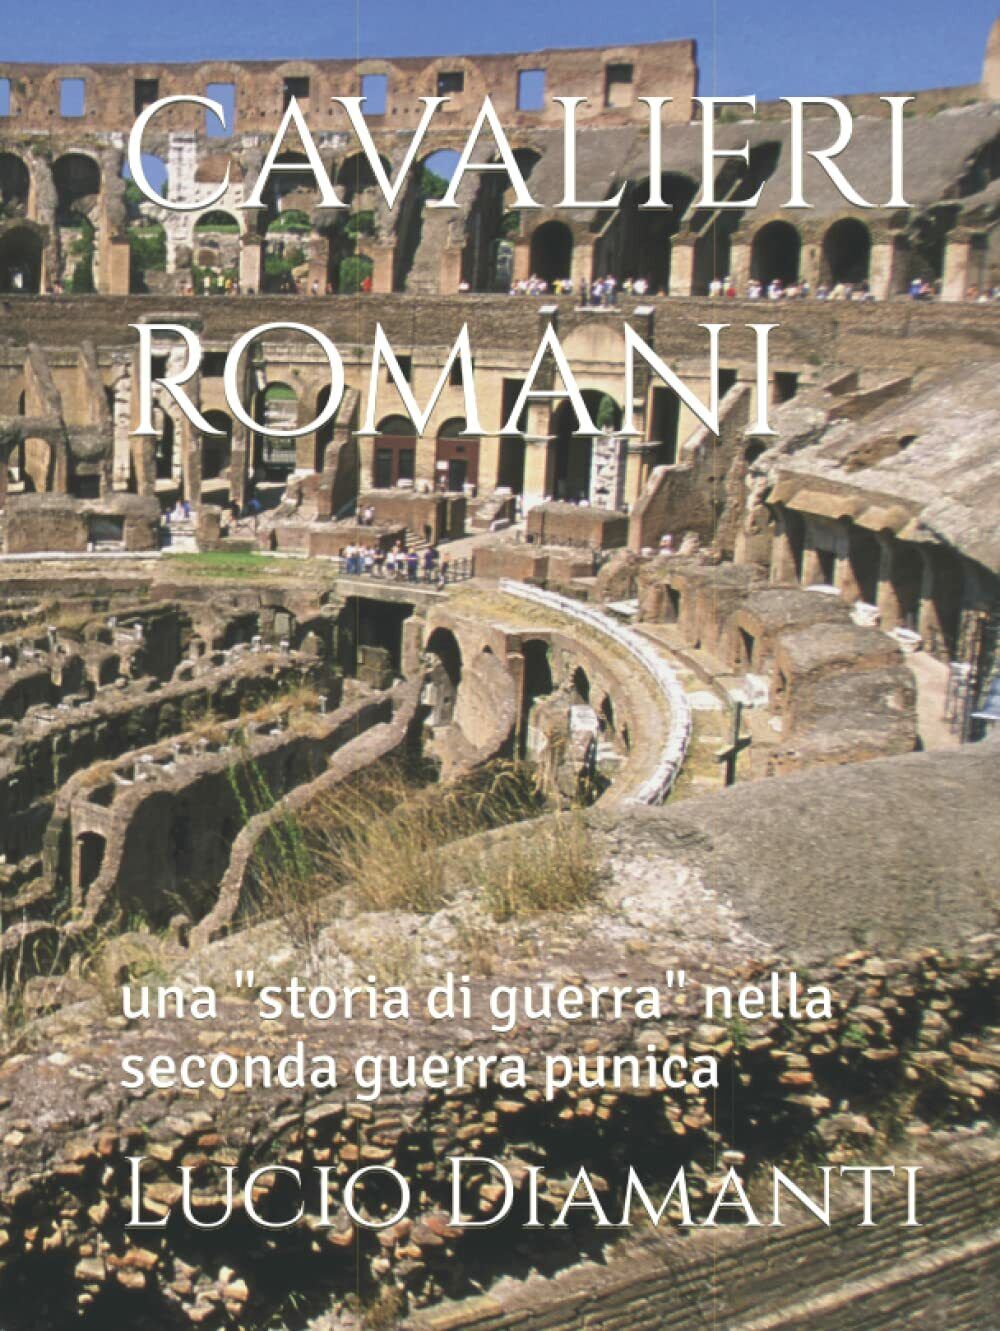 cavalieri romani: una storia di guerra mentre si svolge la seconda guerra punica